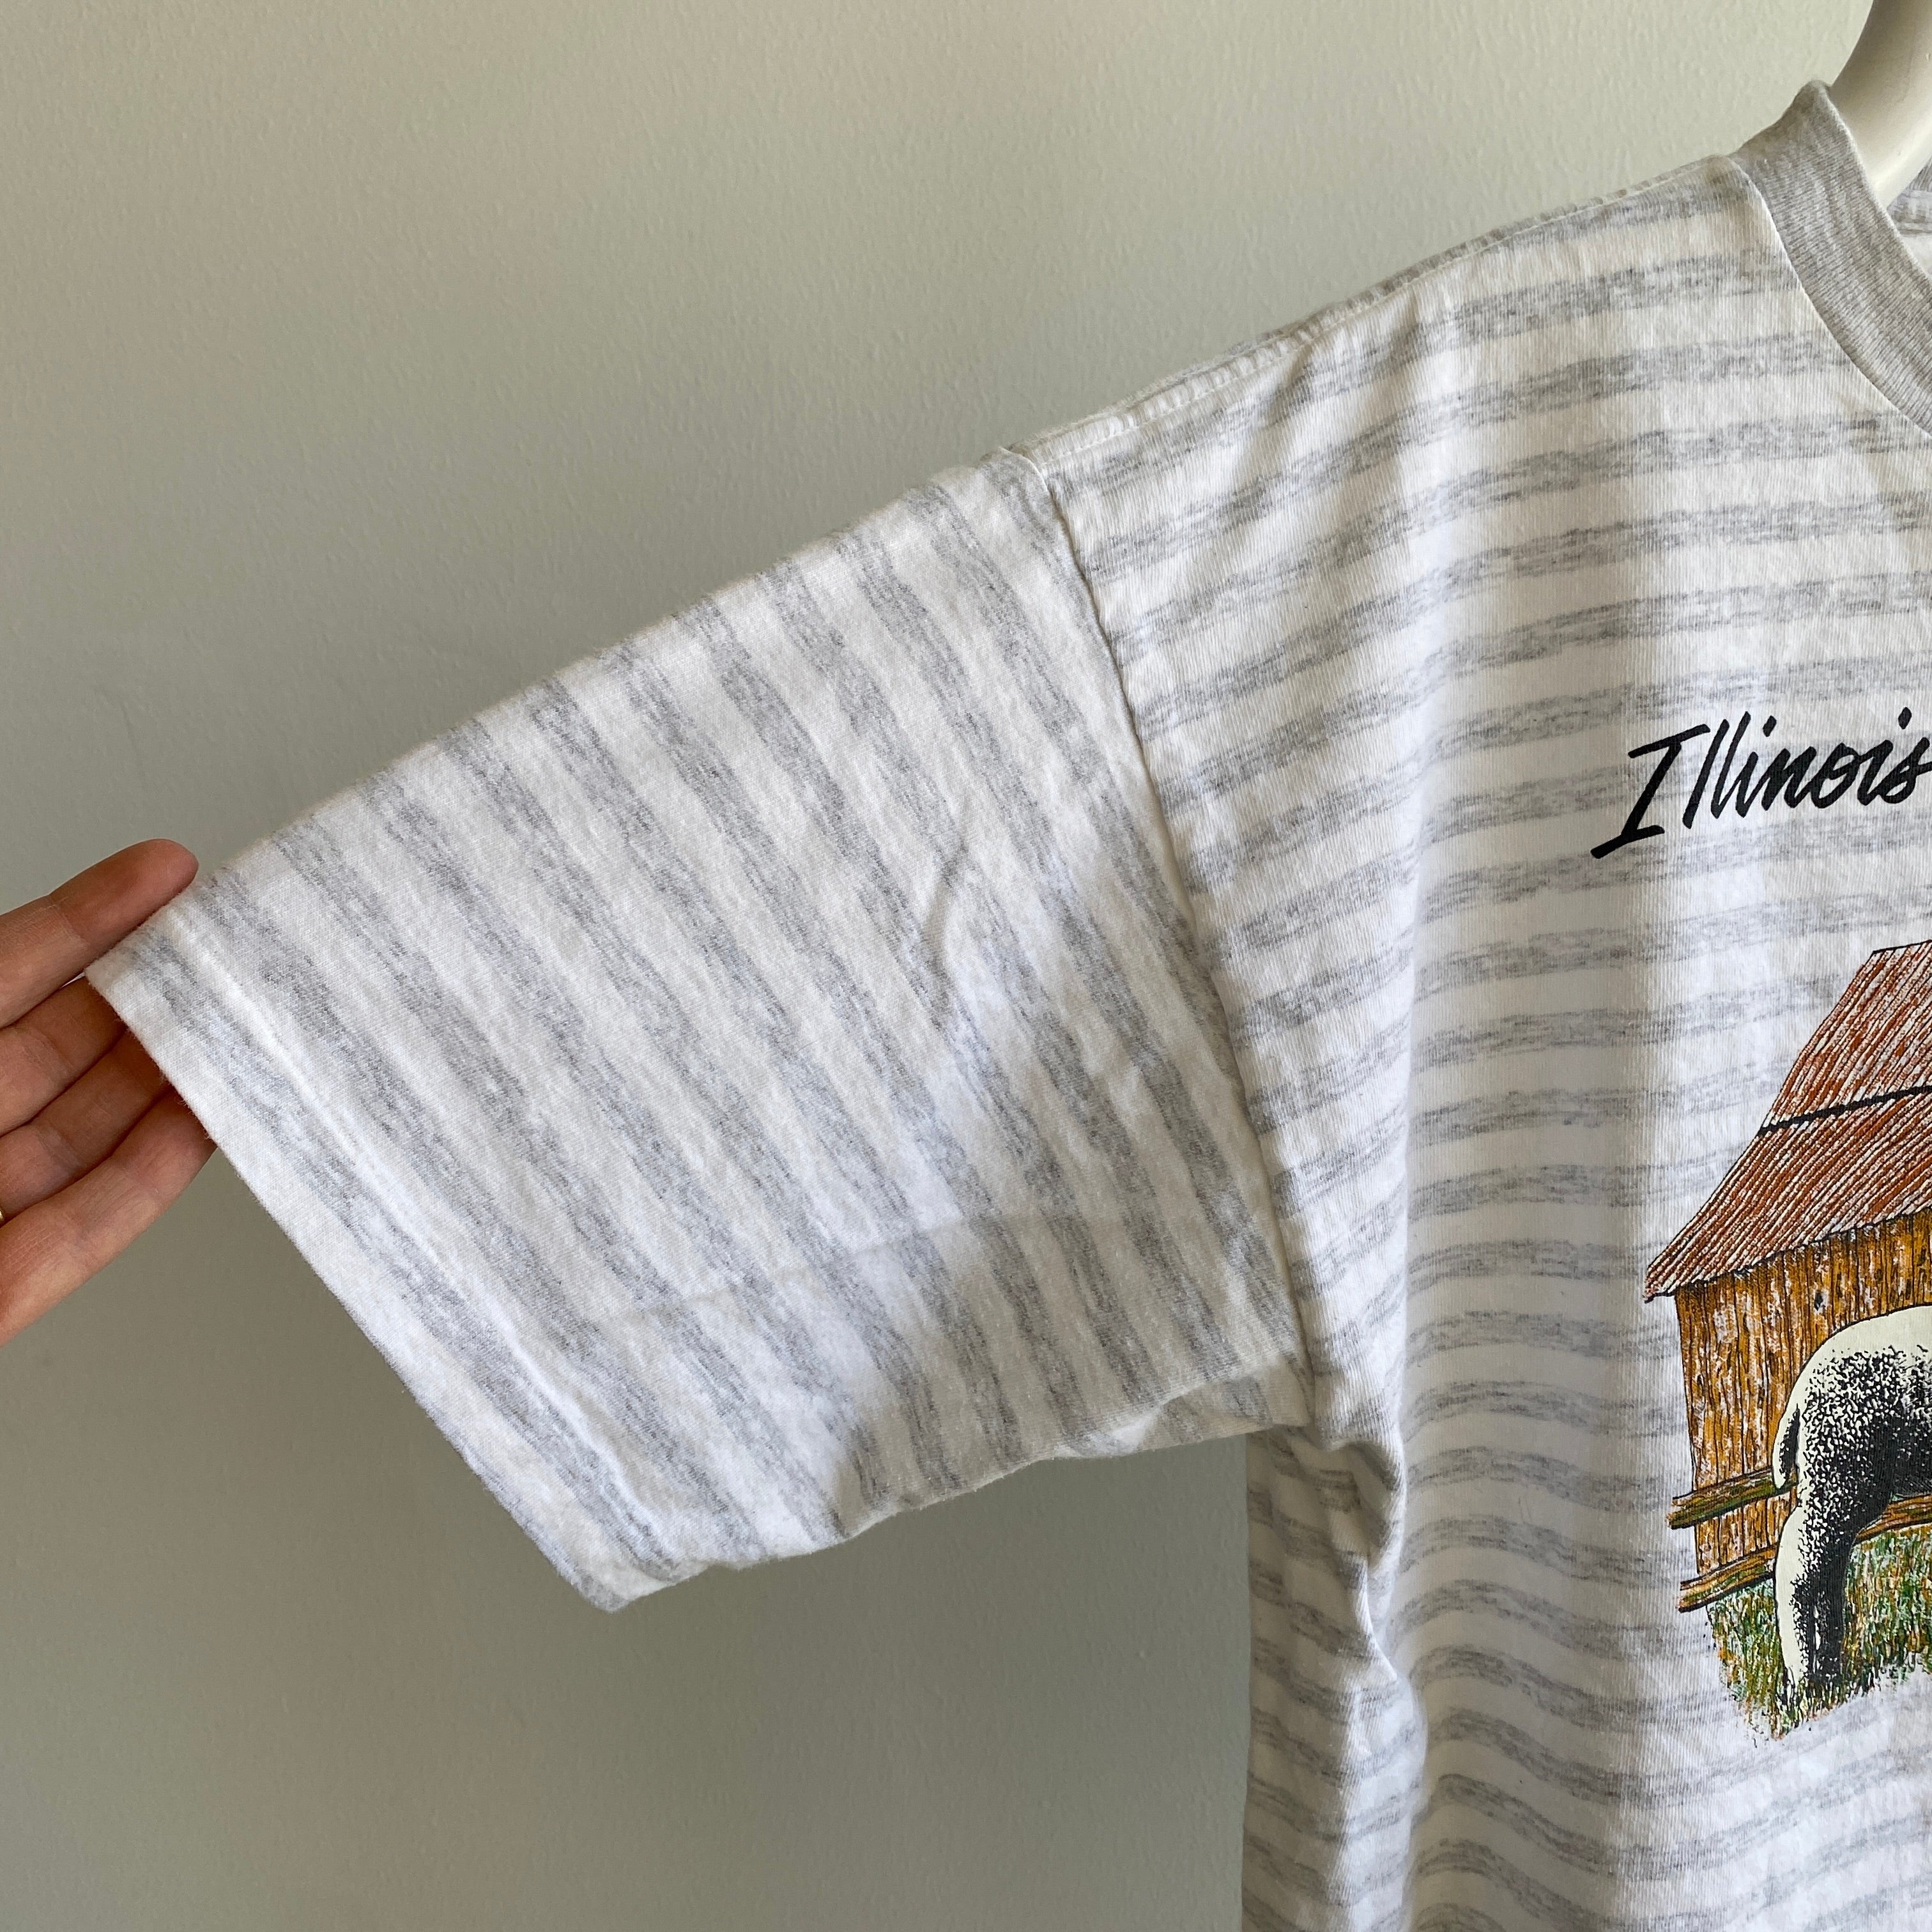 T-shirt rayé mouton années 1980